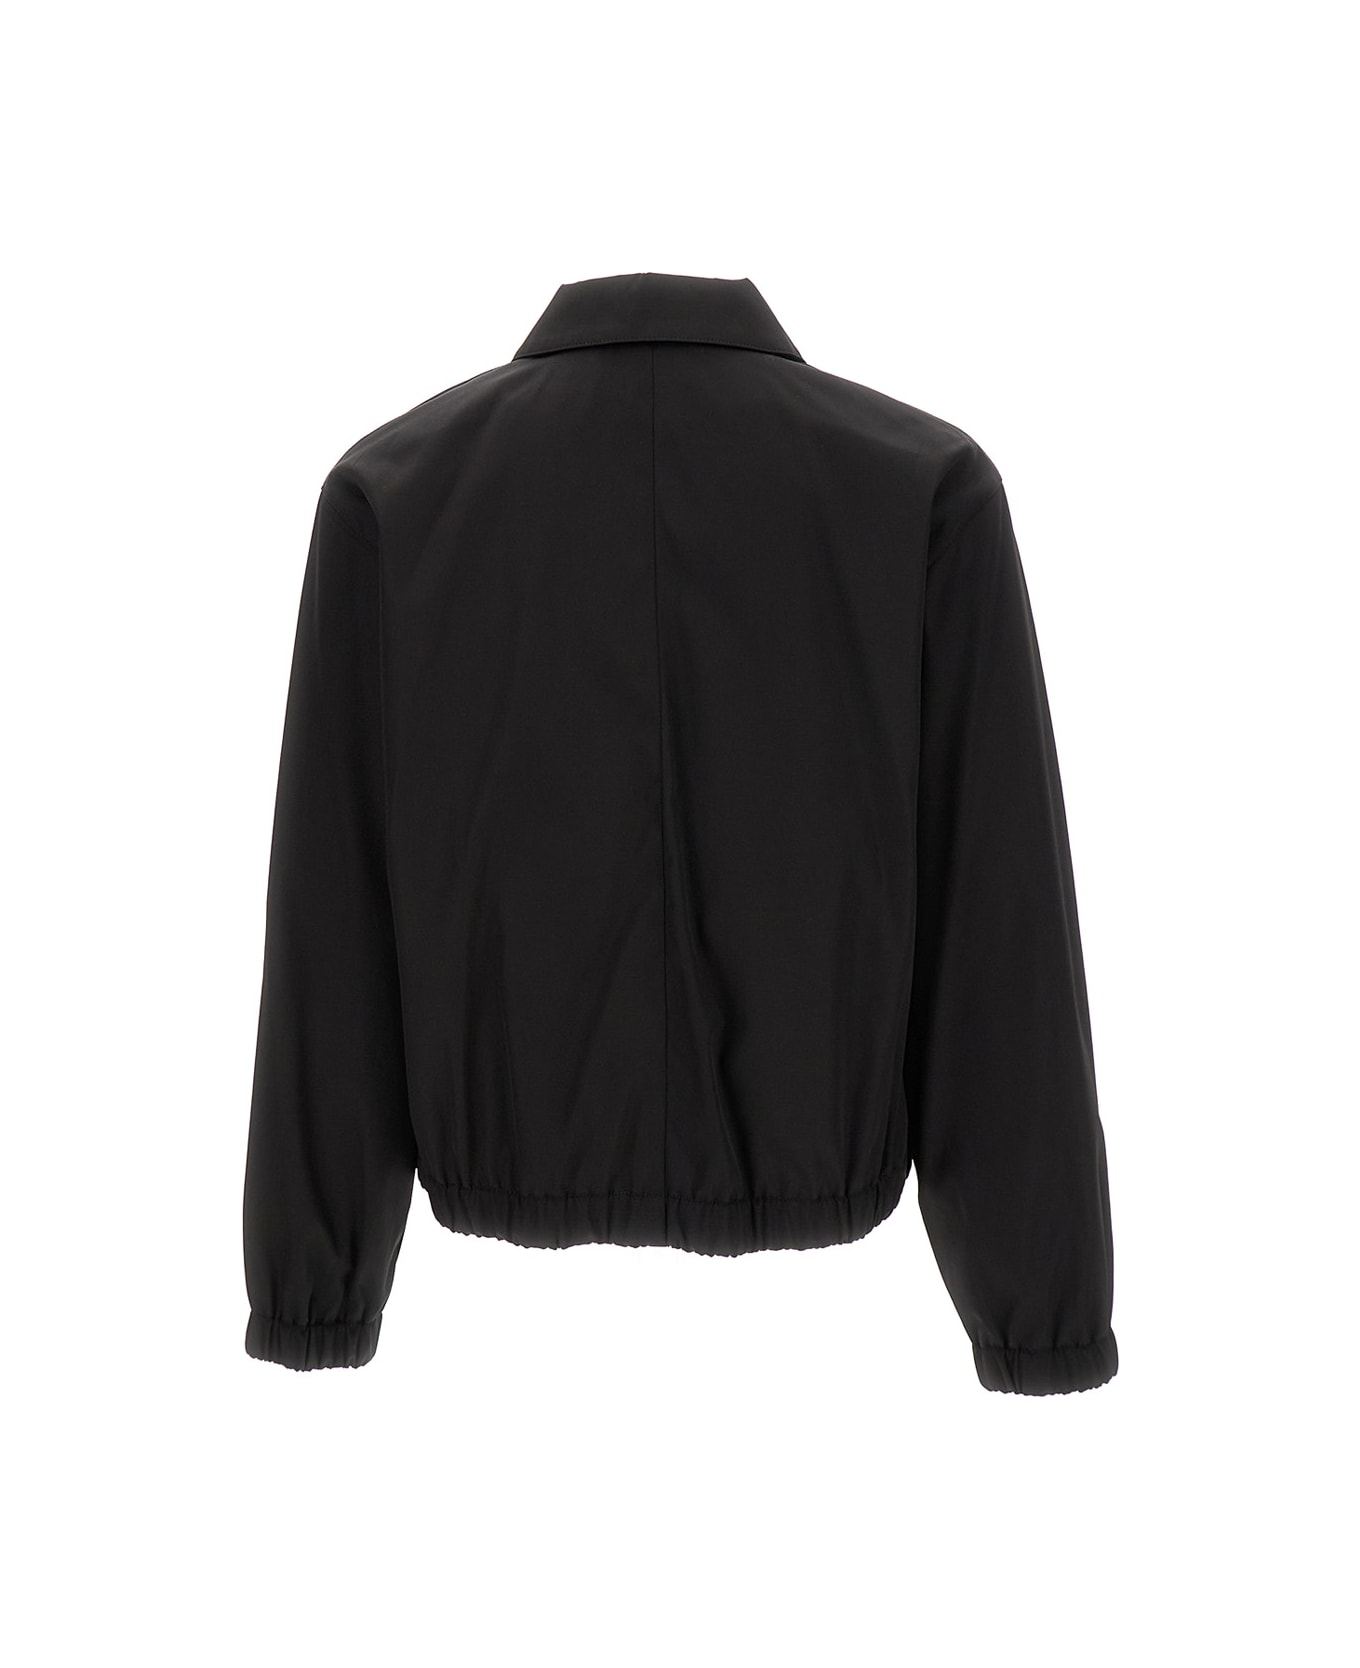 Ami Alexandre Mattiussi Black Jacket With Adc Logo In Cotton Blend Man - Black